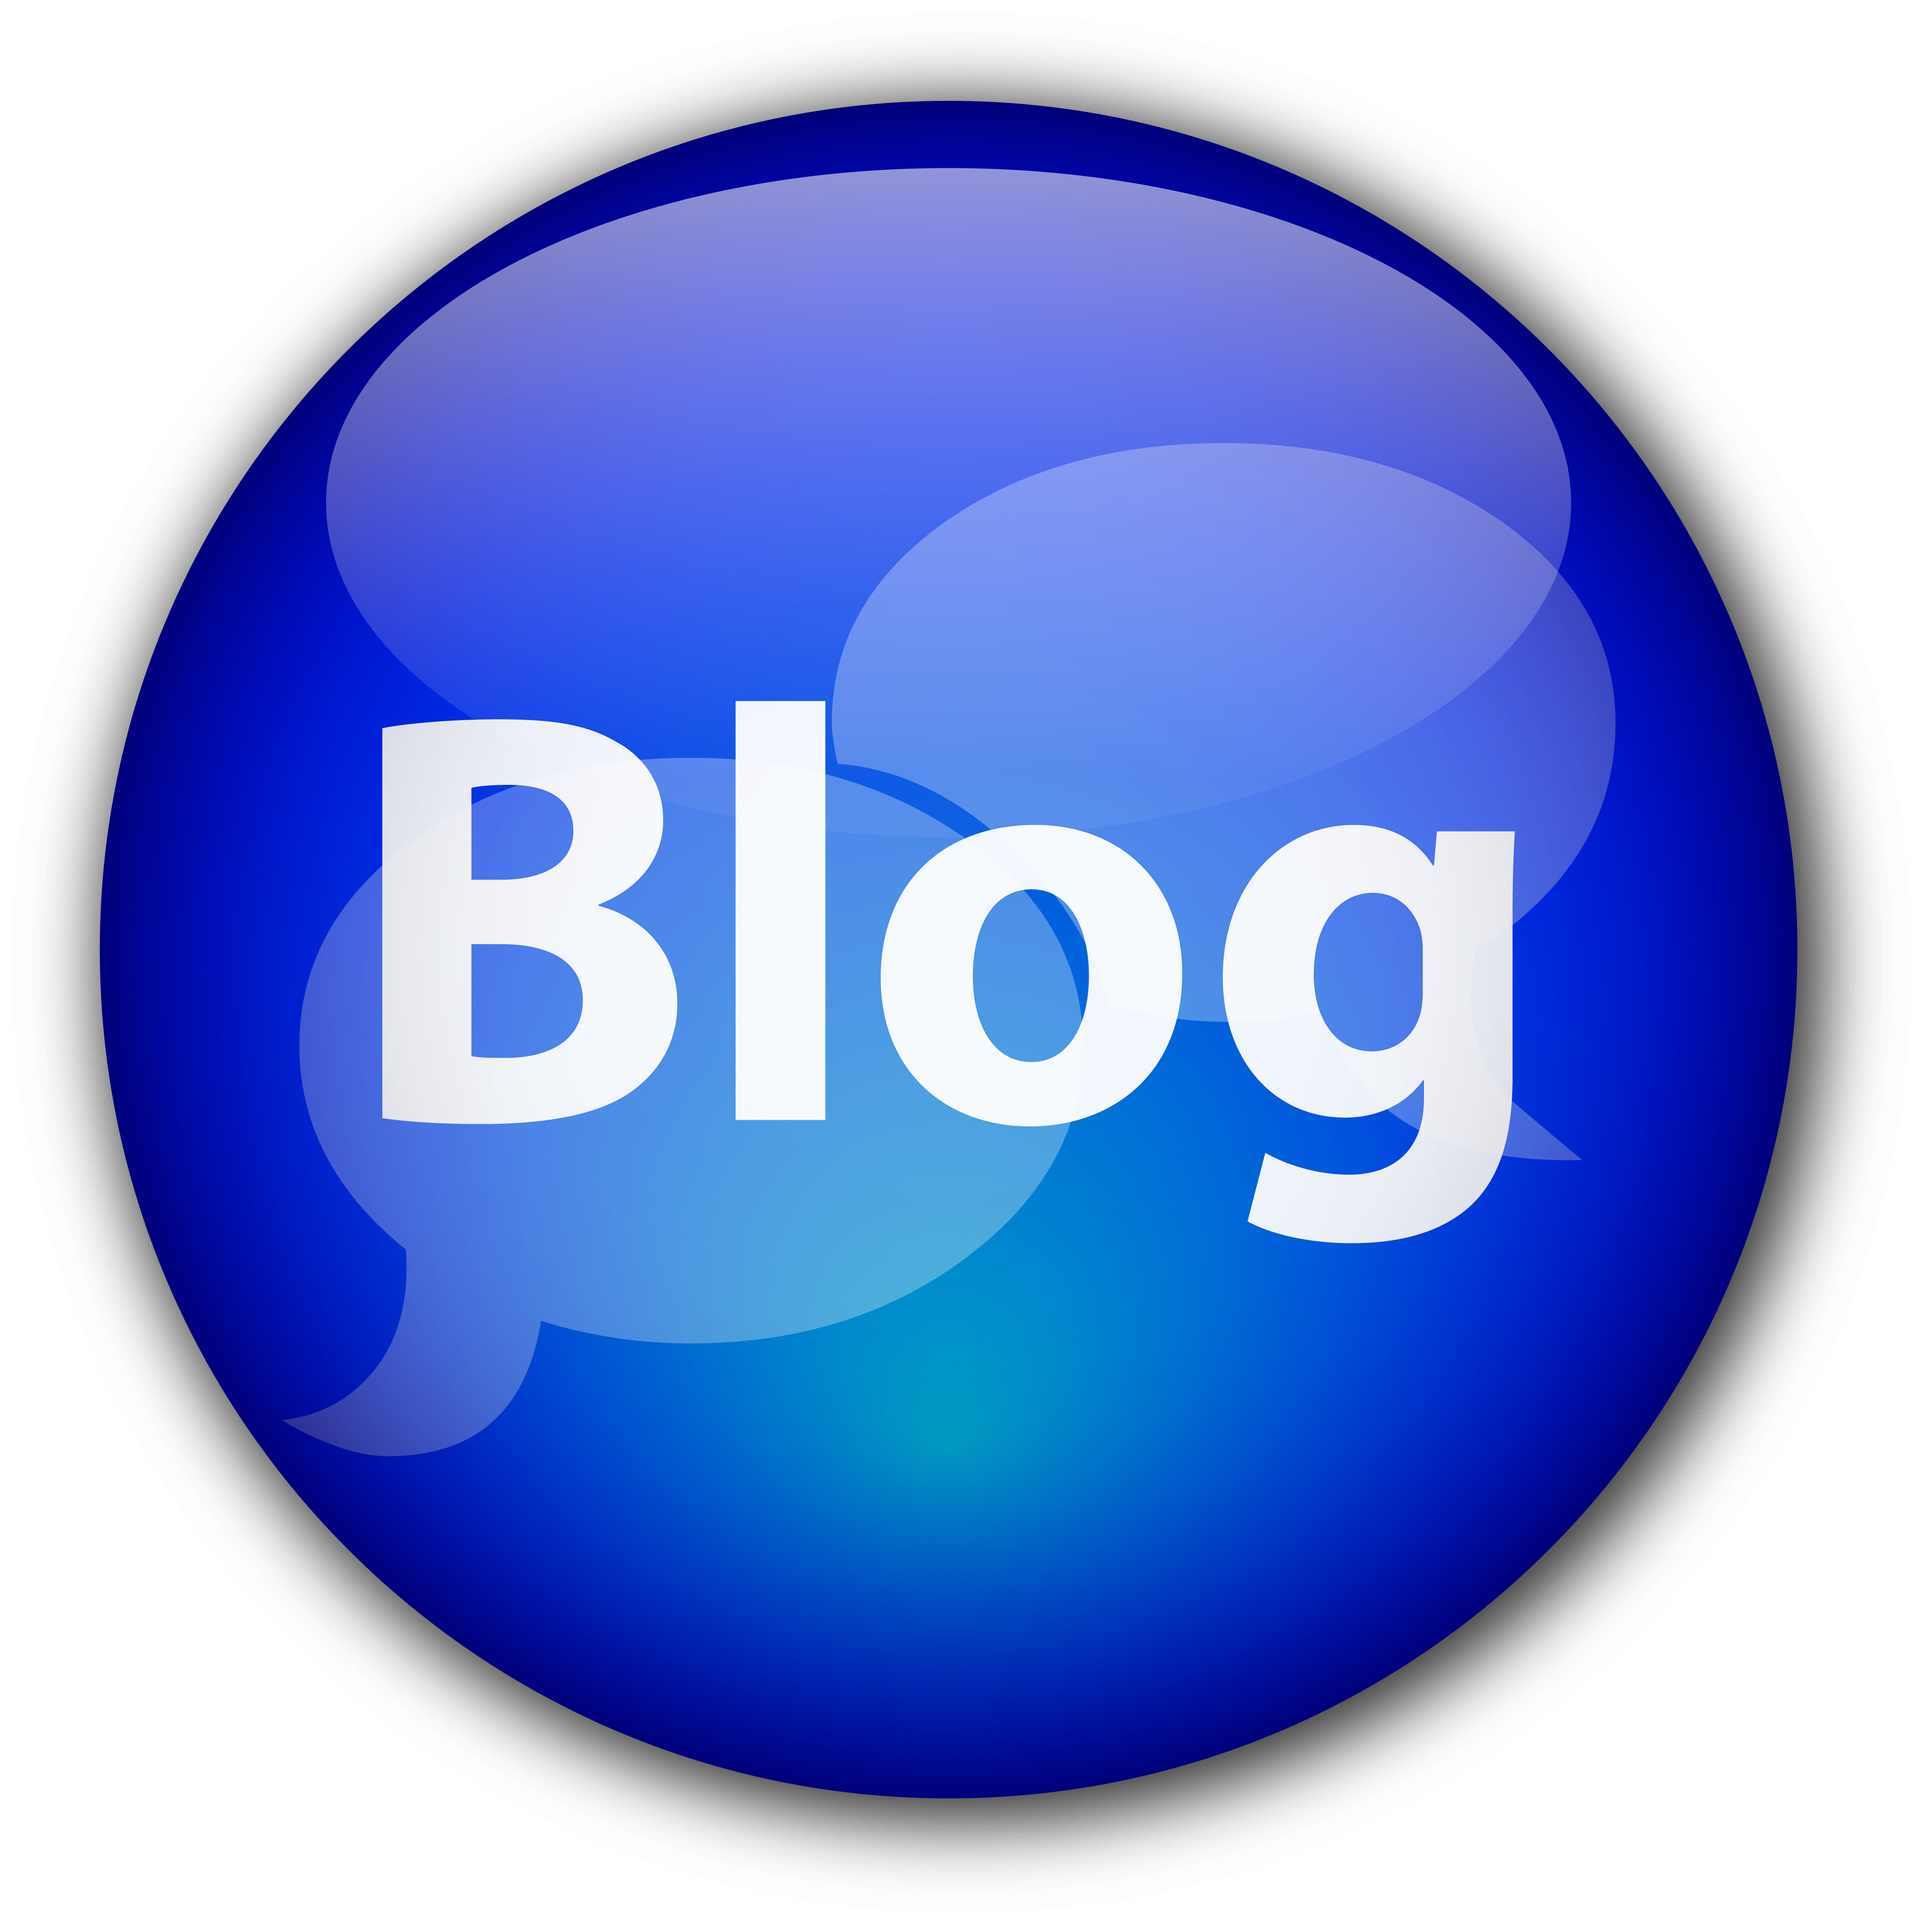 "Blog" button